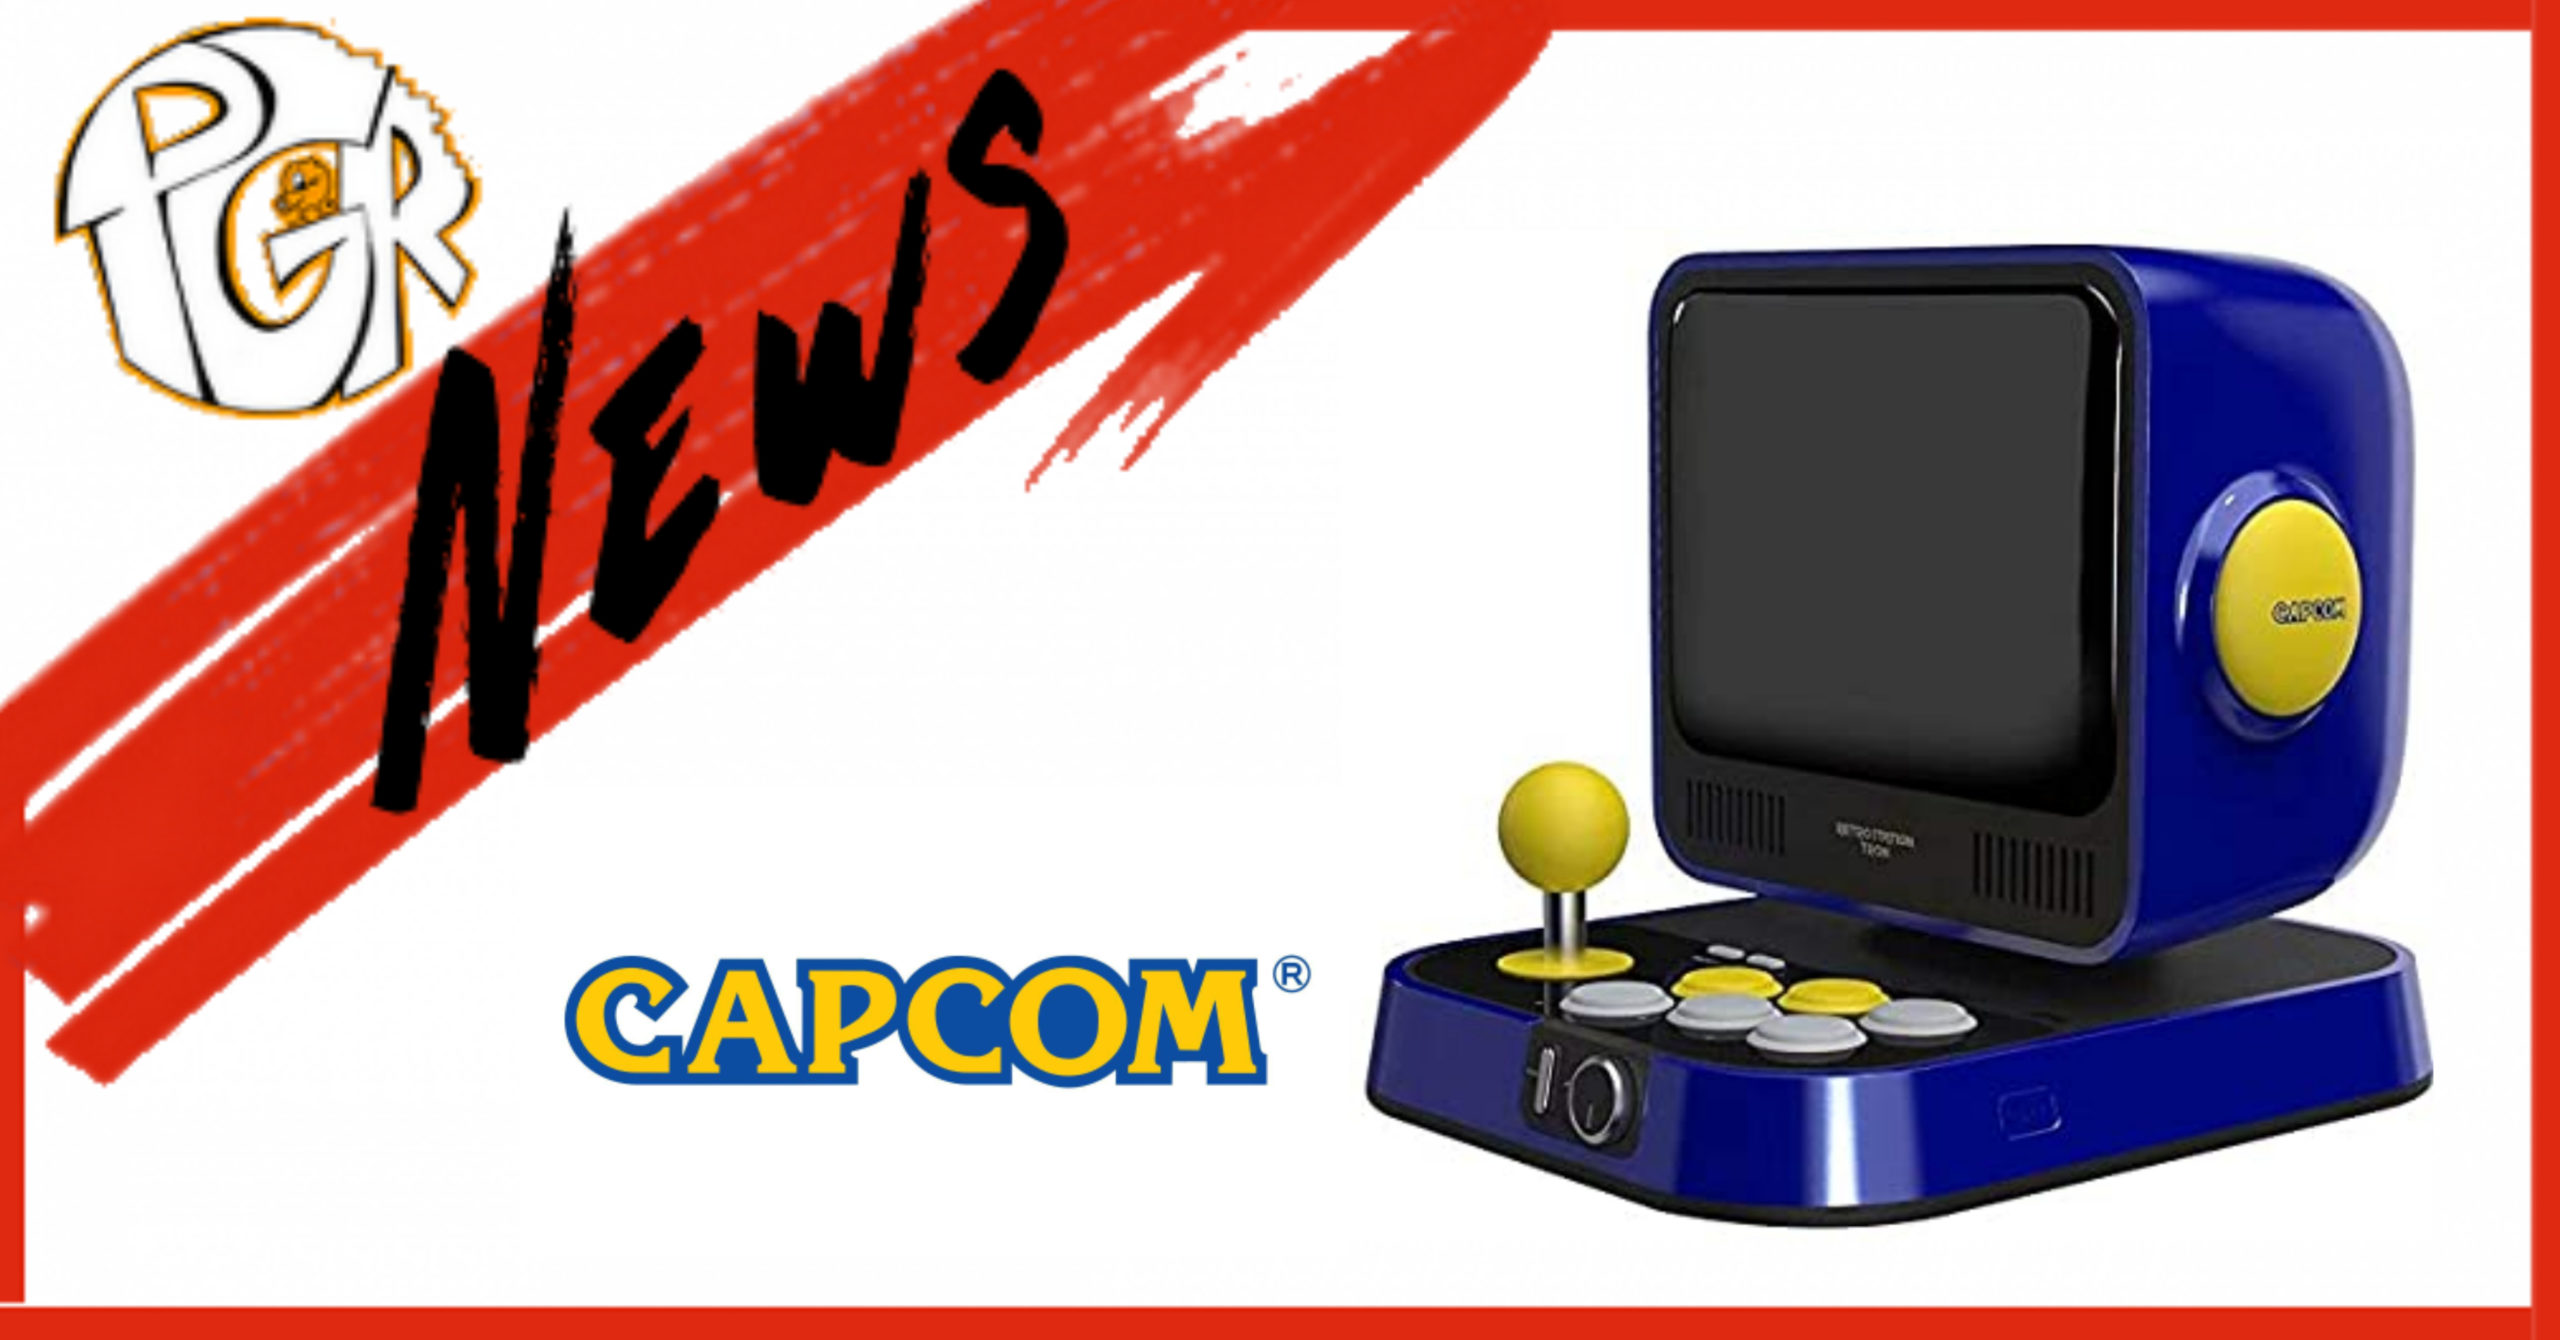 Retro Station de Capcom : une nouvelle mini borne